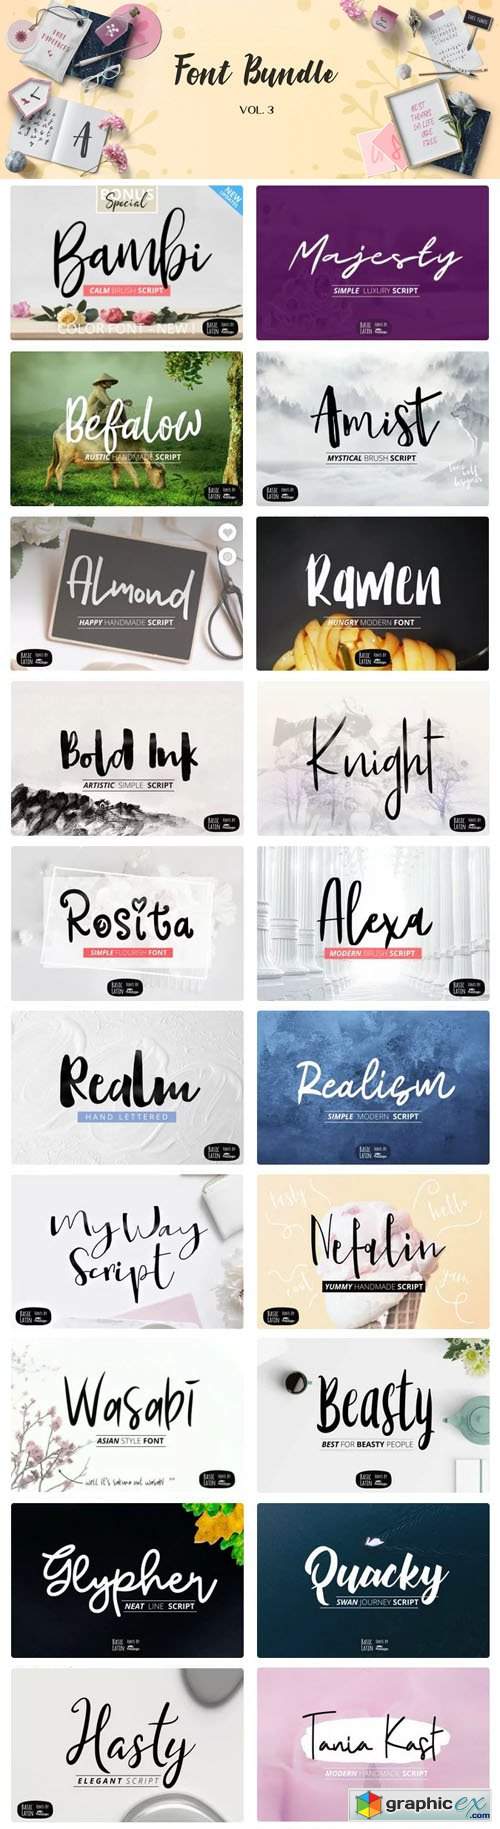  Amazing Font Bundle - 20 New Fonts Collection 